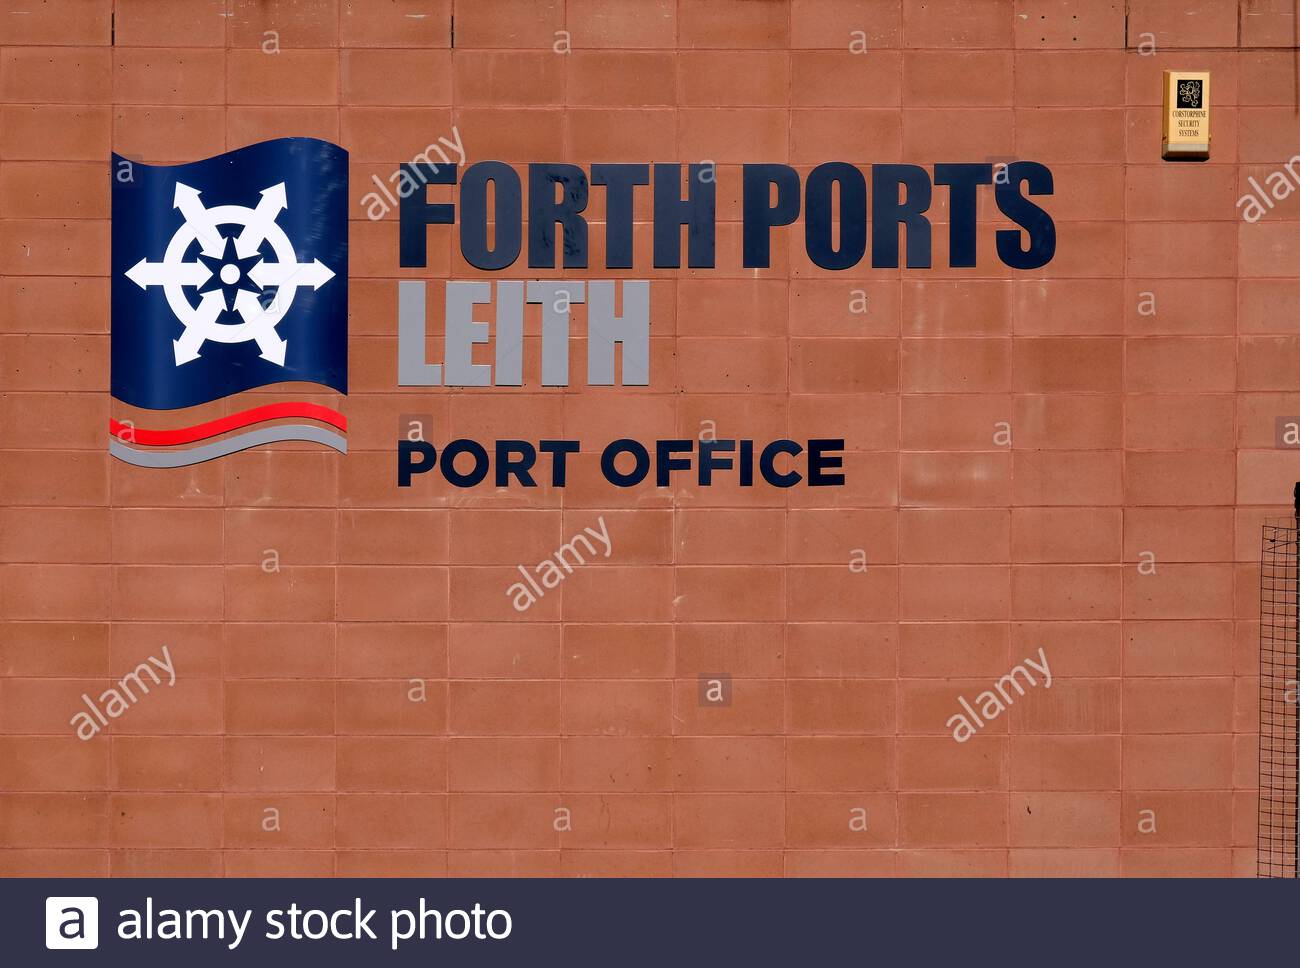 Fort Ports, Leith, Port Office, Leith Edinburgh, Schottland Stockfoto